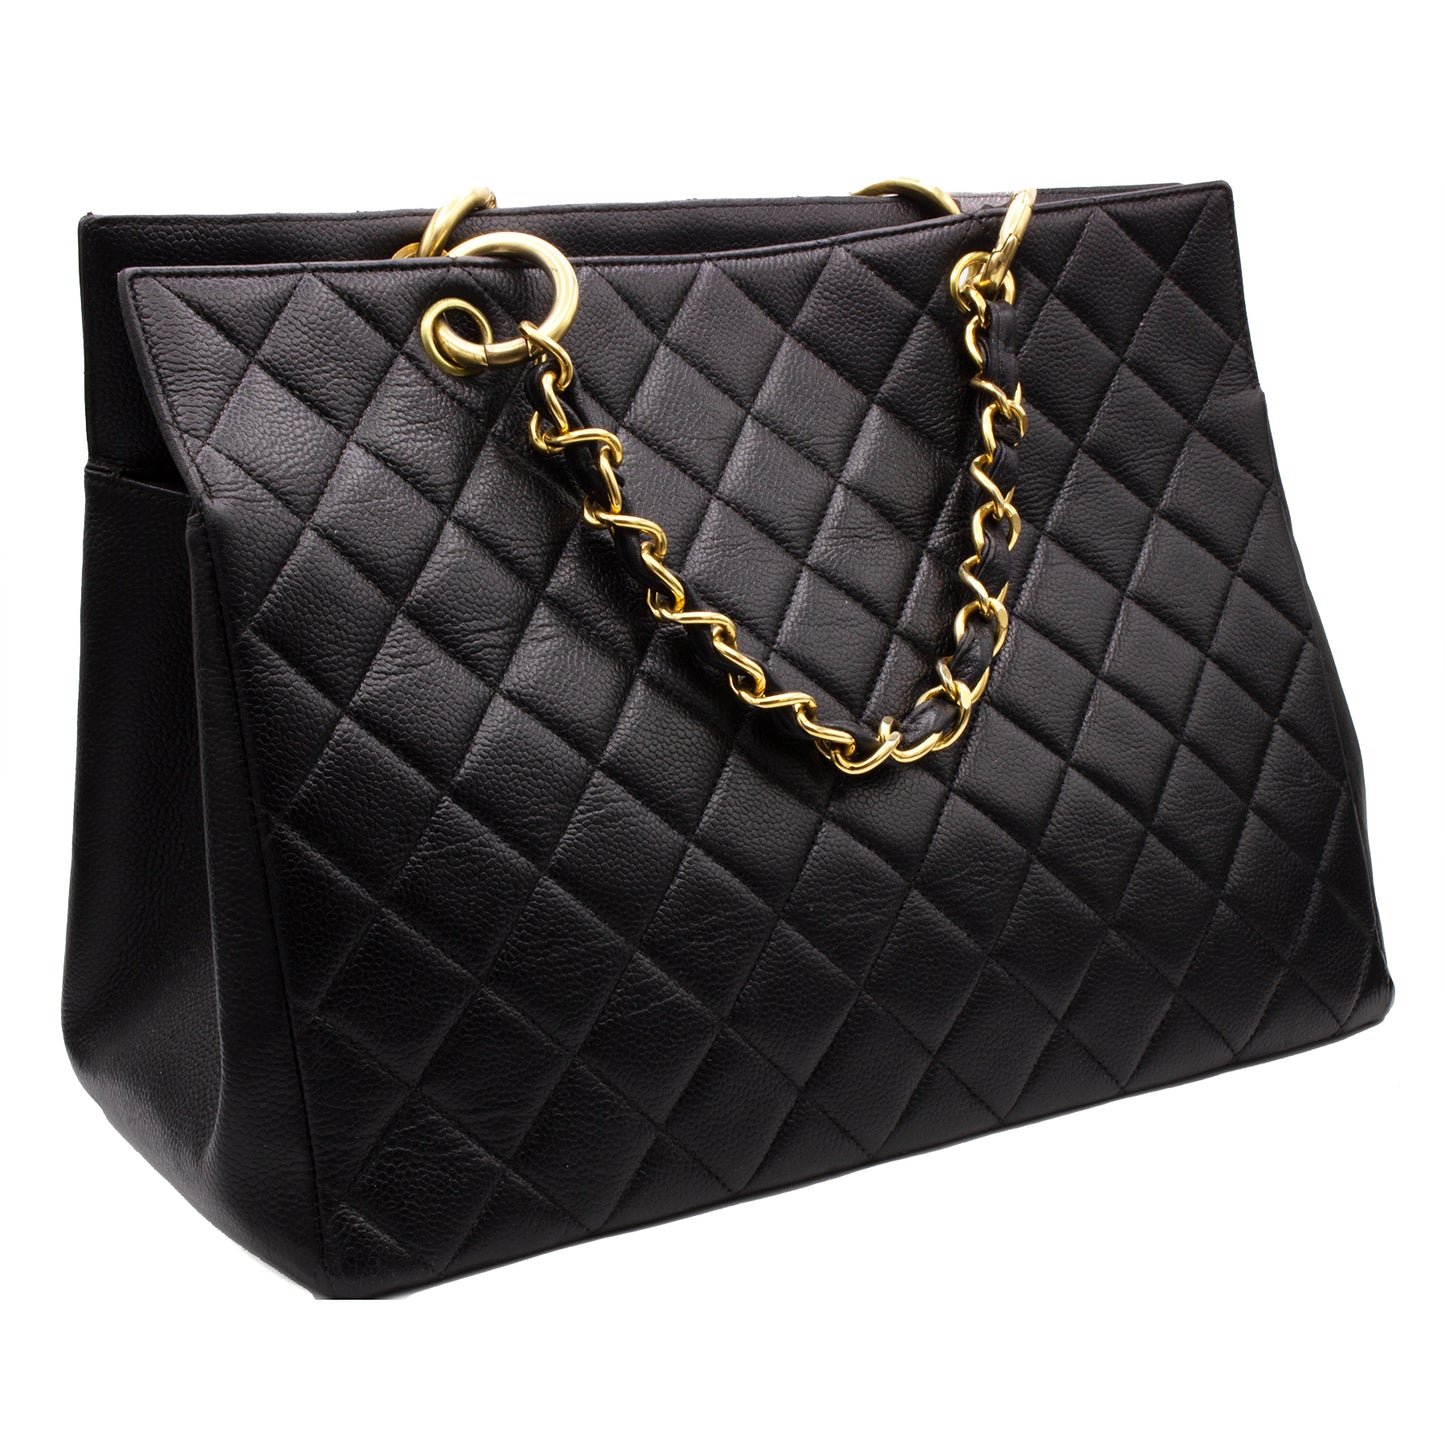 Chanel Shopping GST bag